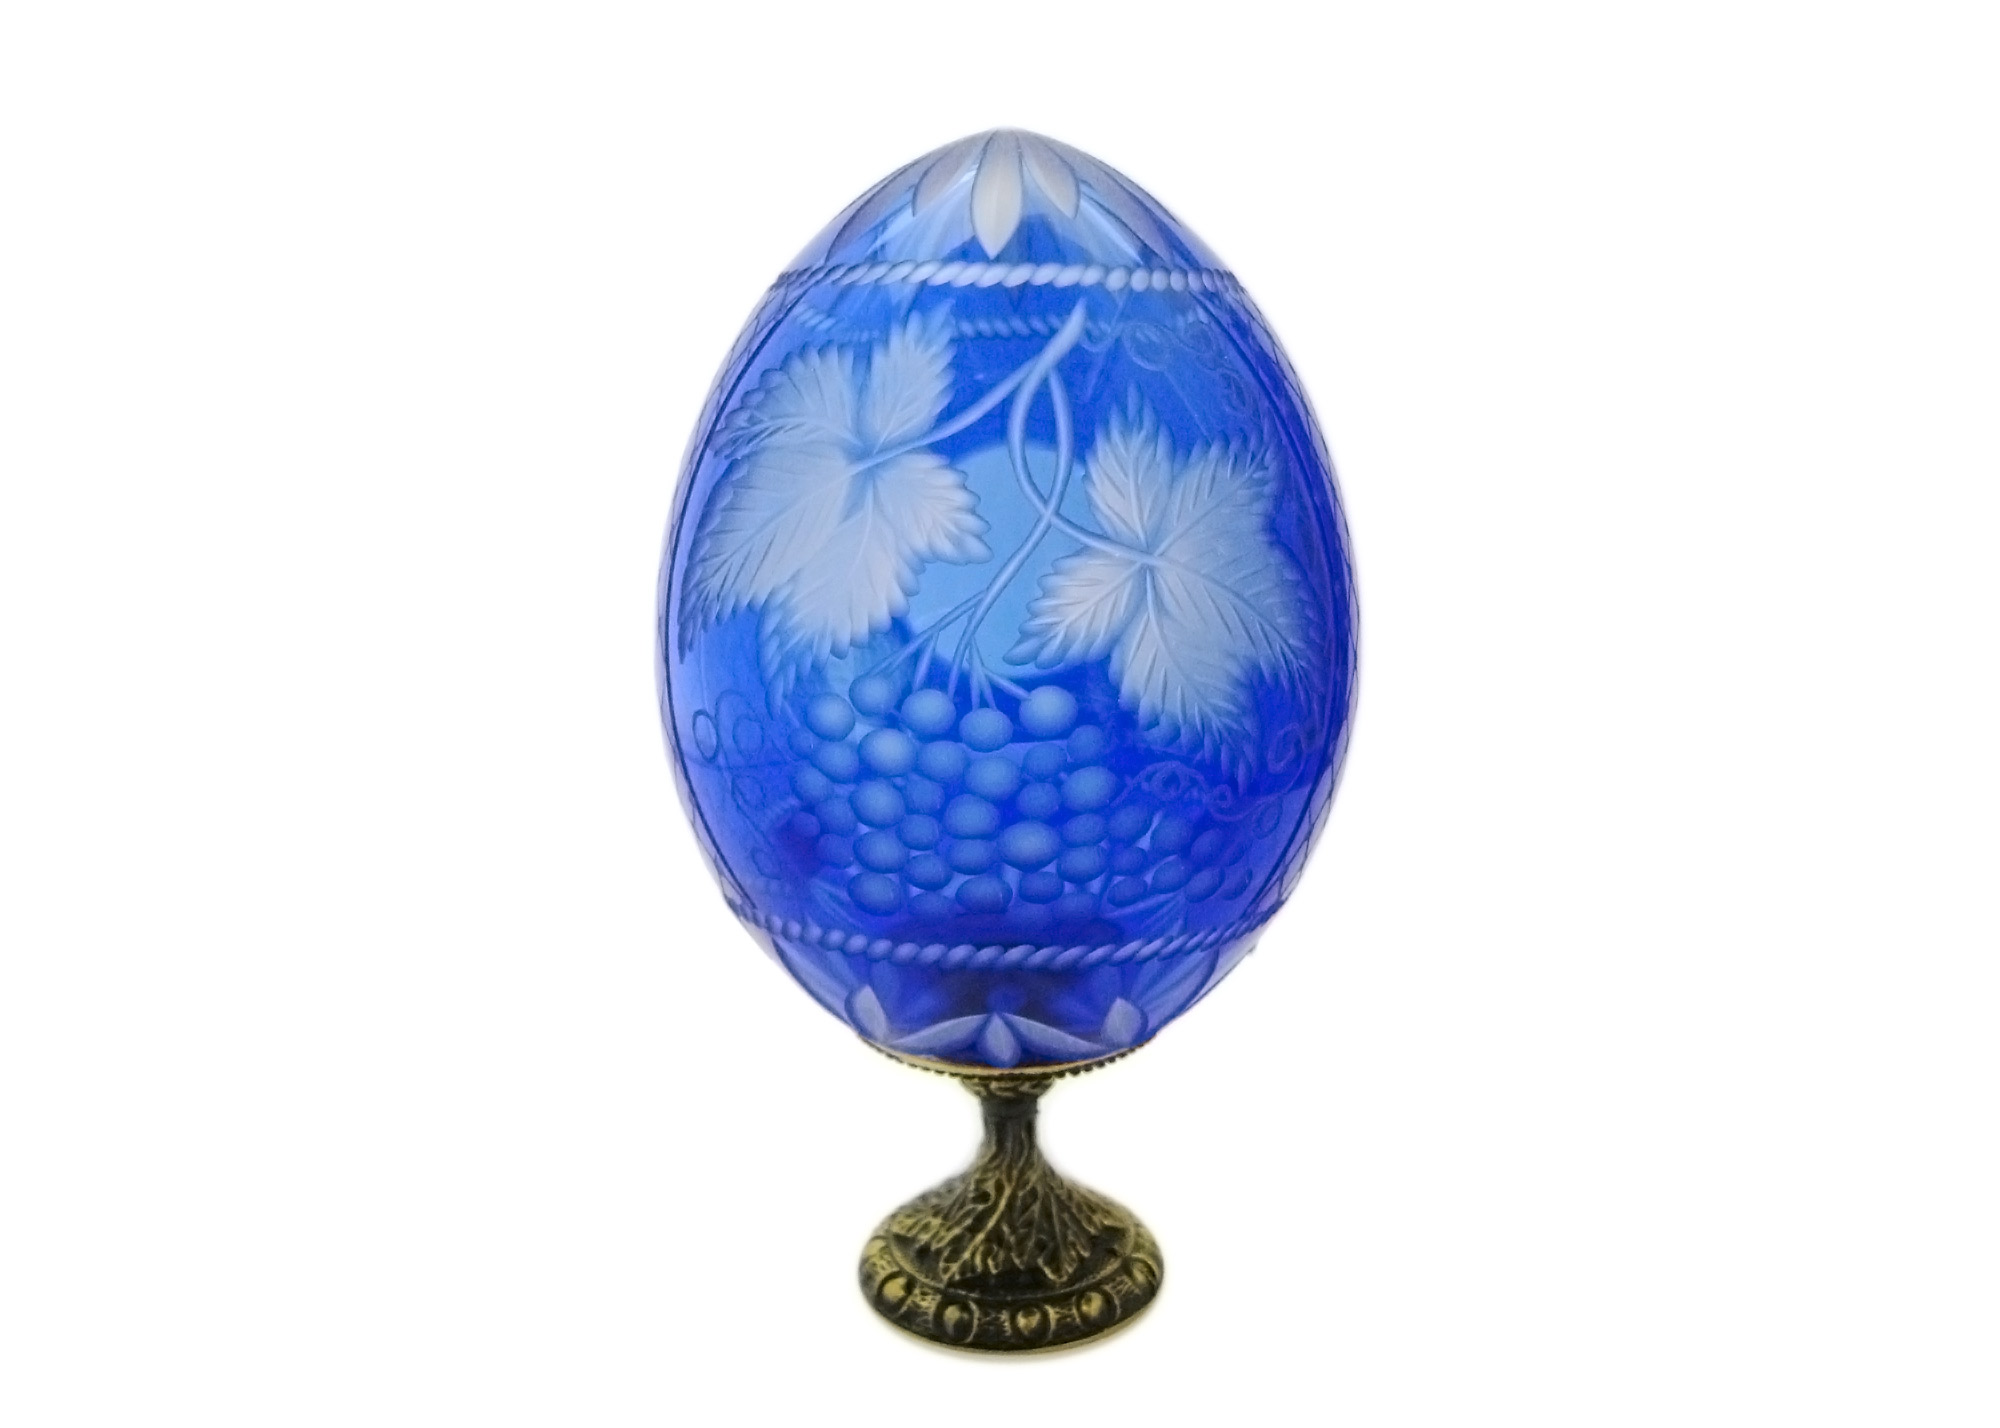 Buy Grapes w/ Lense BLUE Faberge Style Egg at GoldenCockerel.com